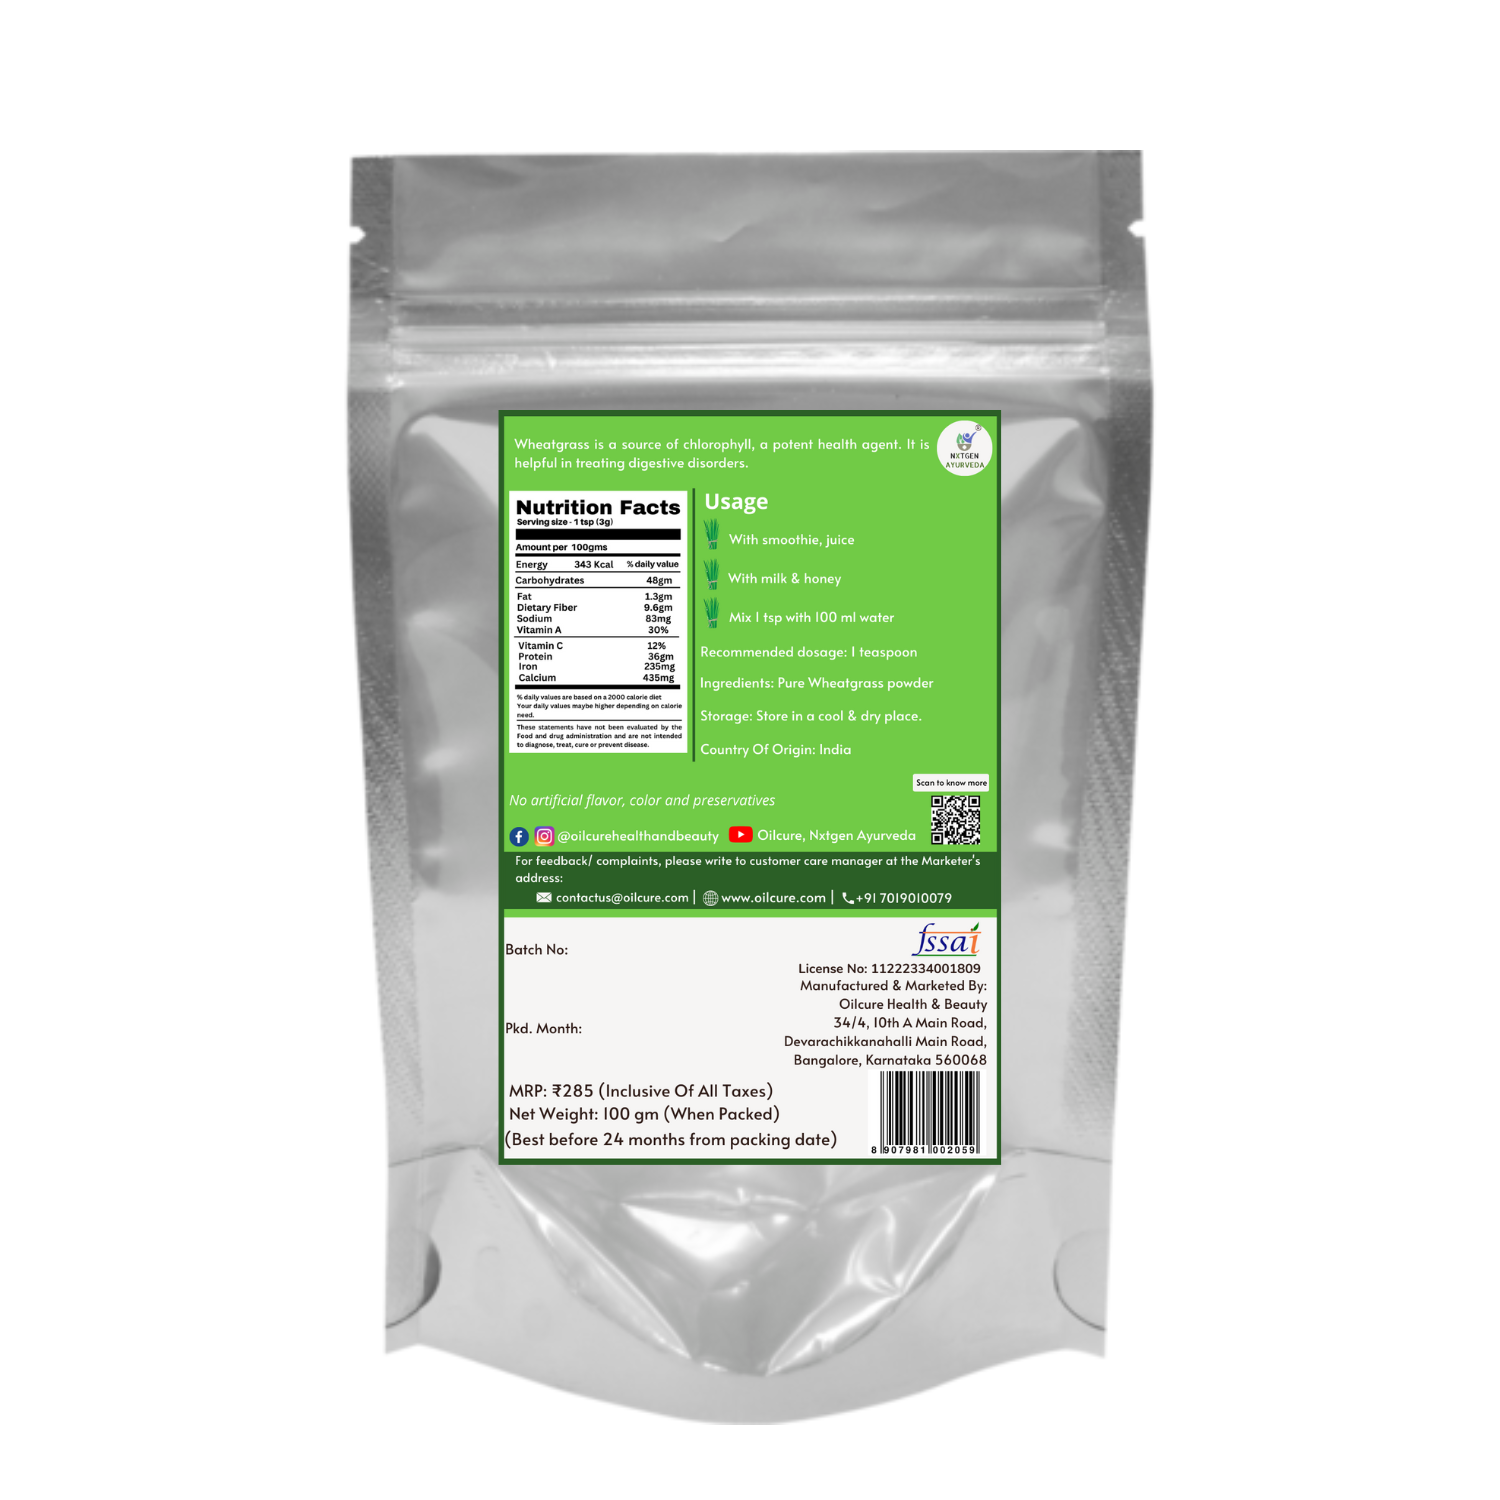 Nxtgen Ayurveda Wheat Grass Powder - 100 gms (Pack of 2)